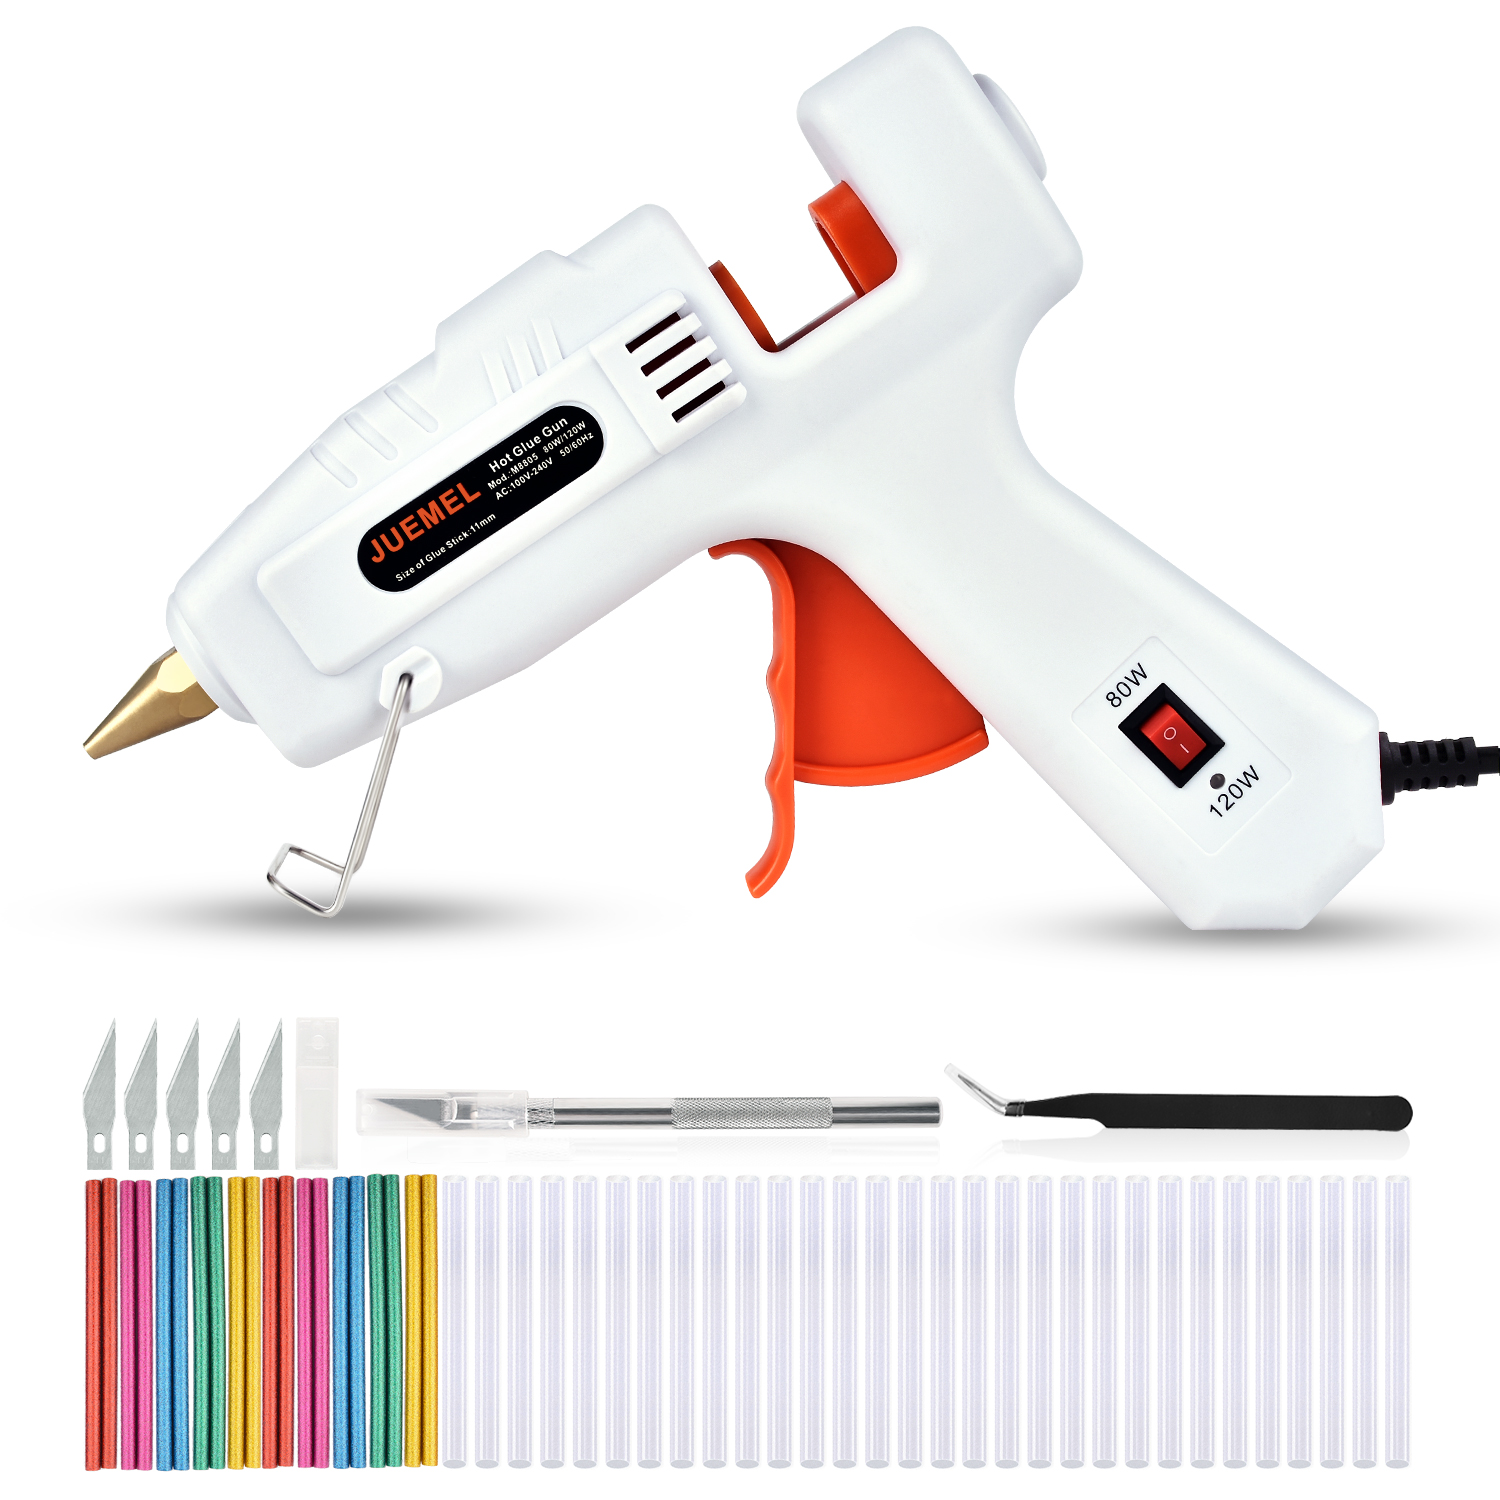 Hot Glue Gun, JUEMEL Glue Gun 80W 120W Dual Power with 30Pcs (11mm) Color and White Glue Sticks for Crafts DIY Paper Card Projects Home Repair